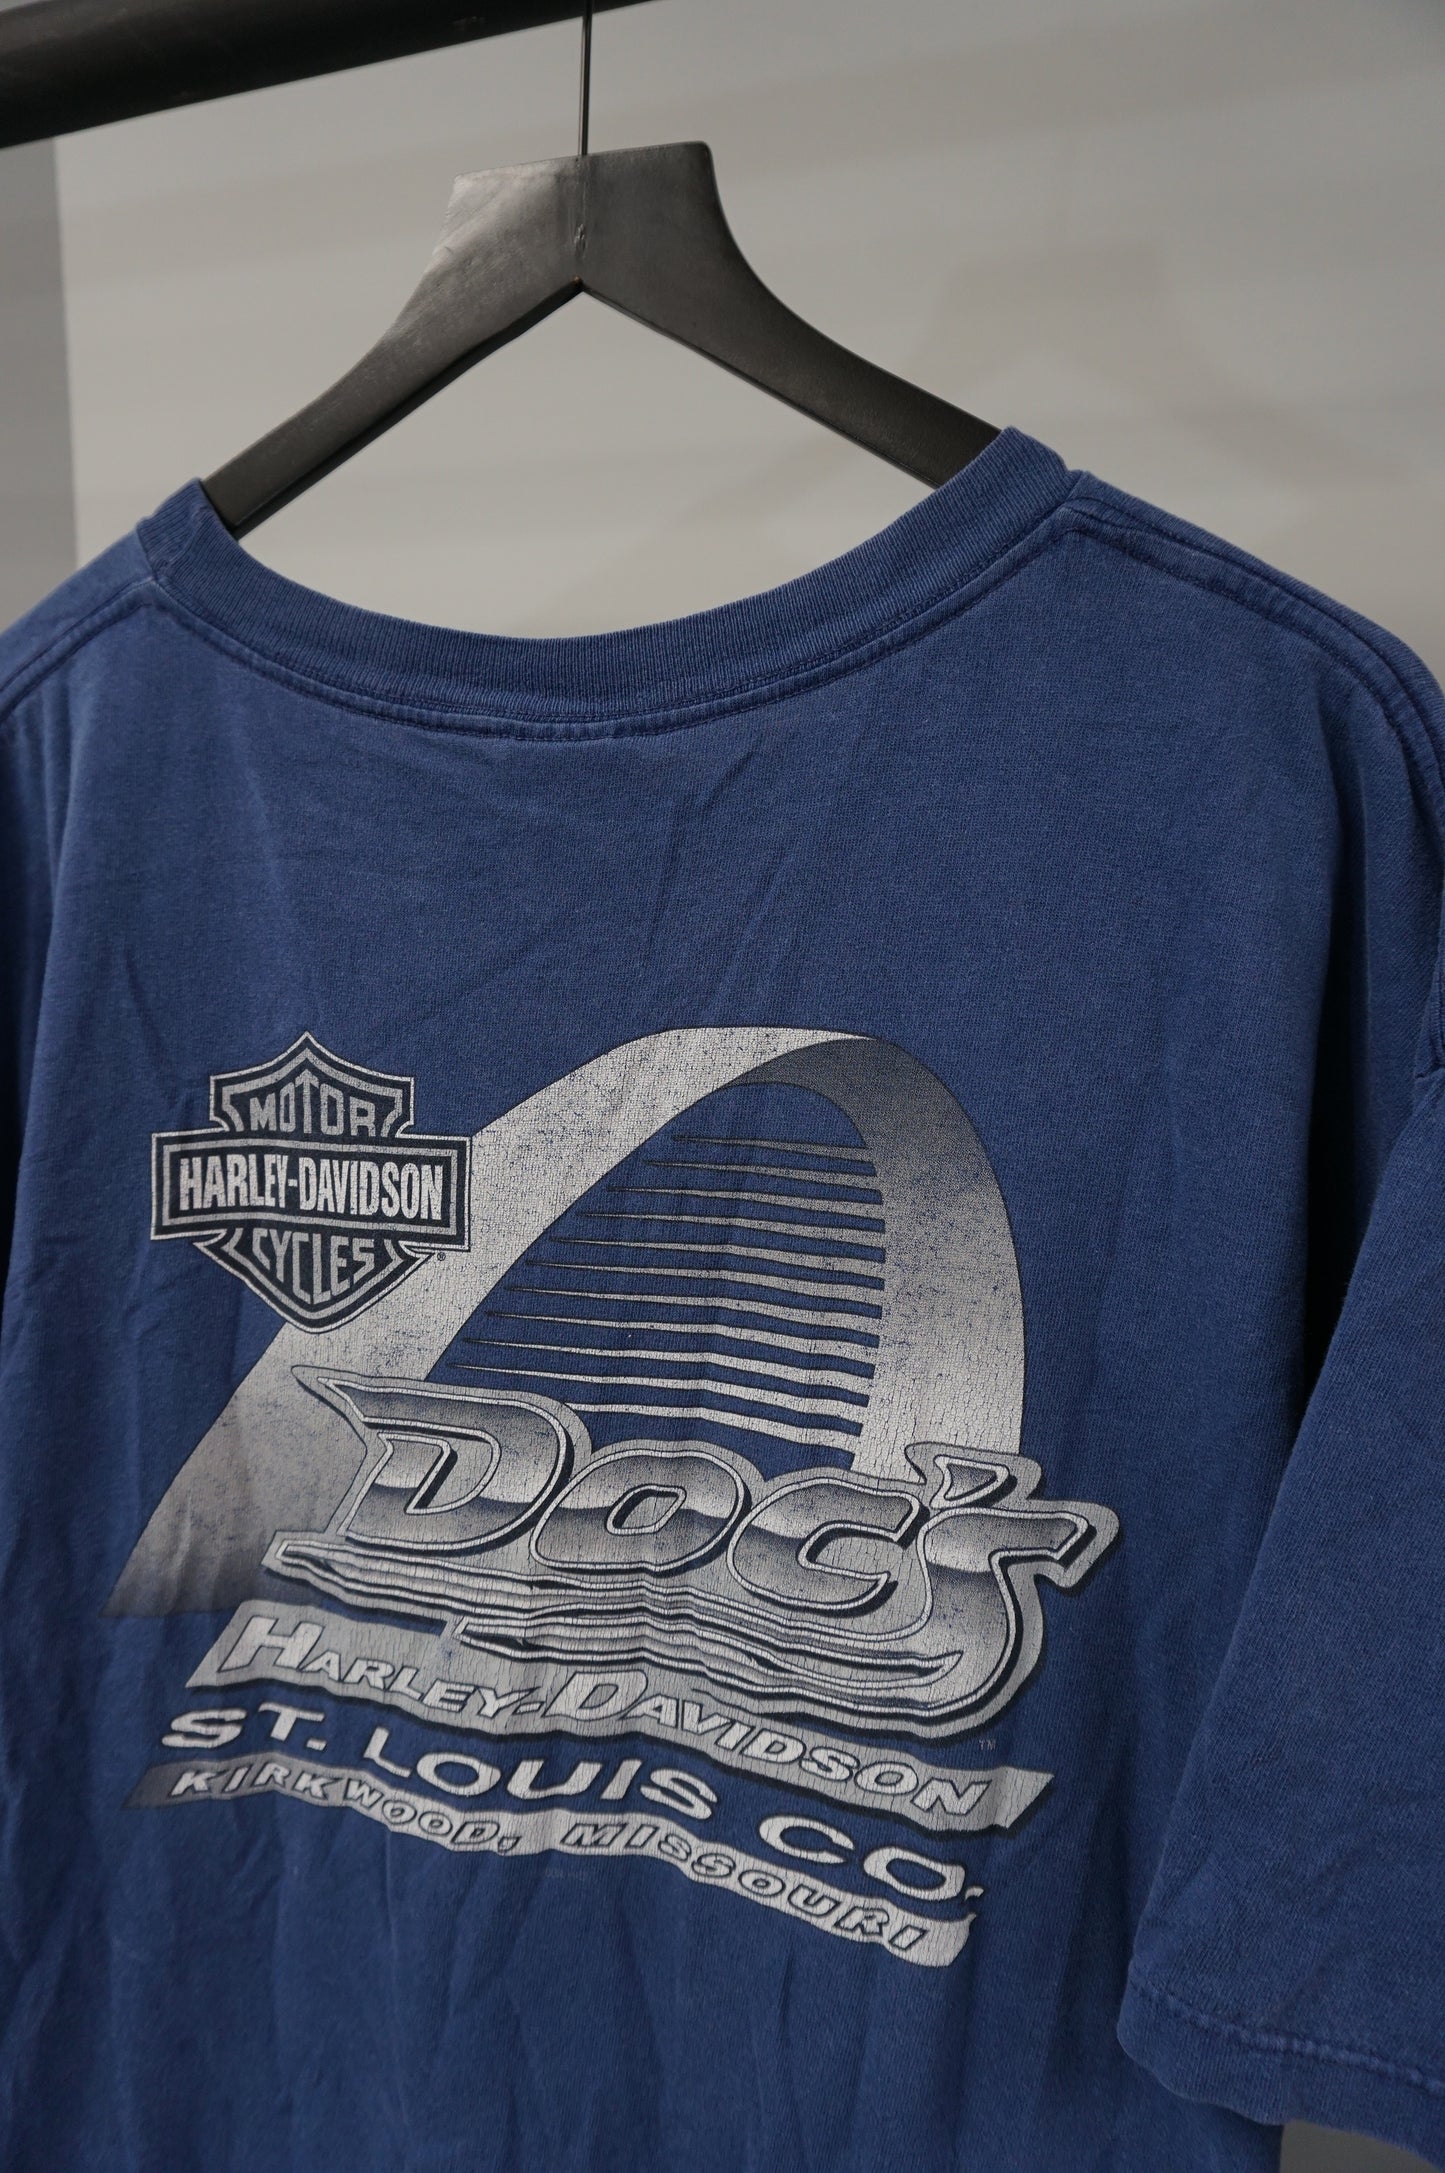 (XL) 2006 St Louis Harley Davidson T-Shirt